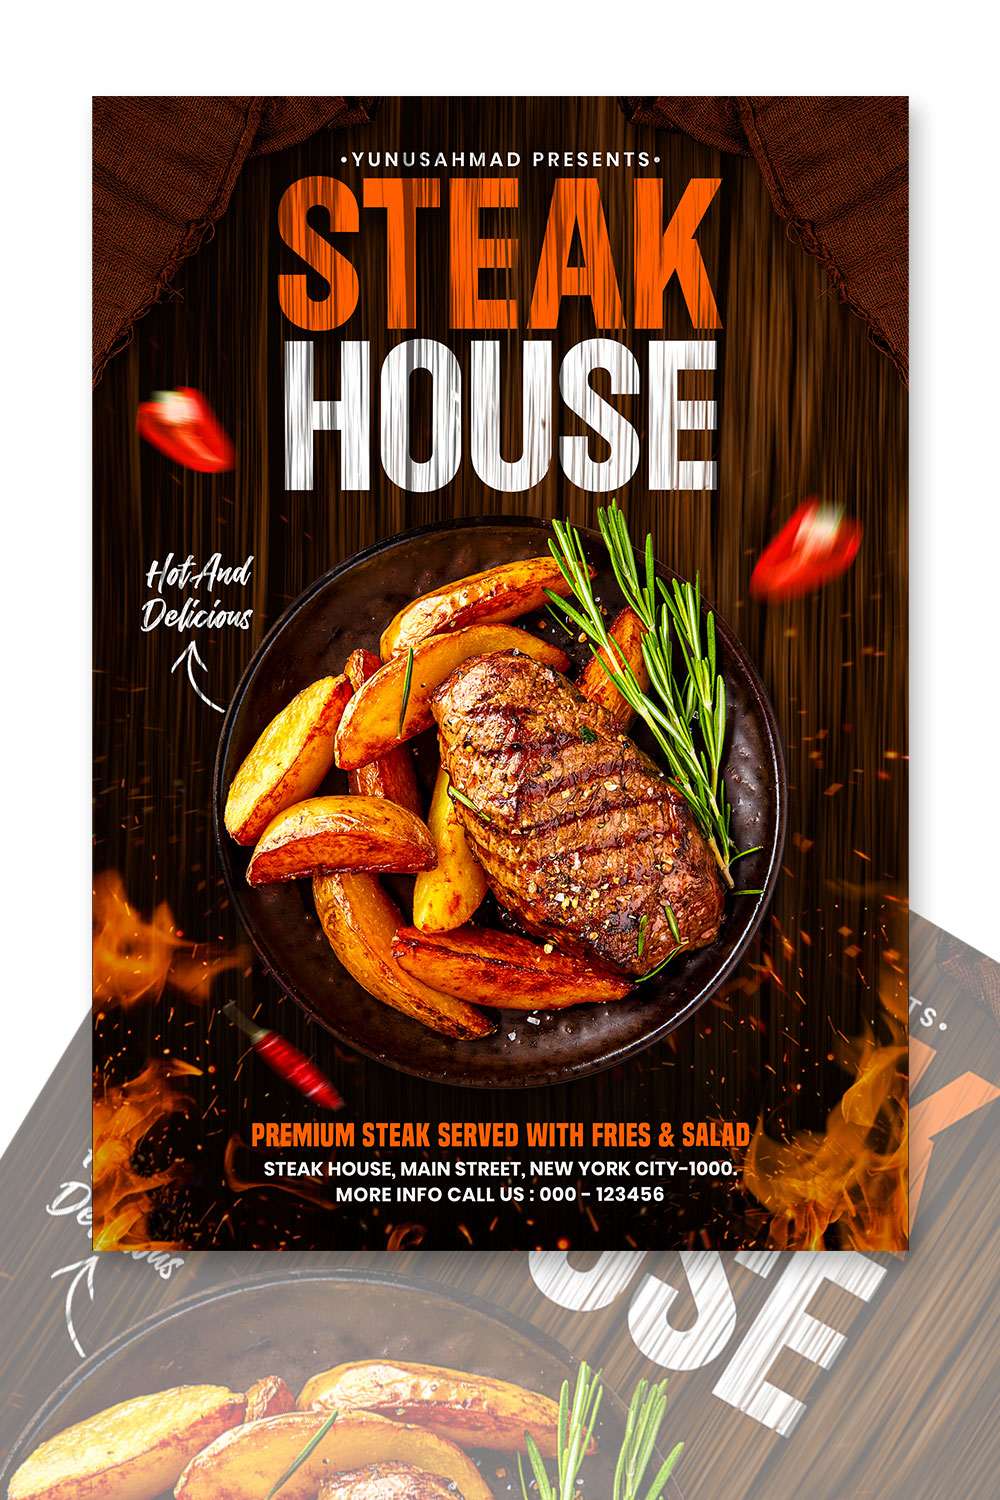 Grilled steak house restaurant flyer template pinterest preview image.